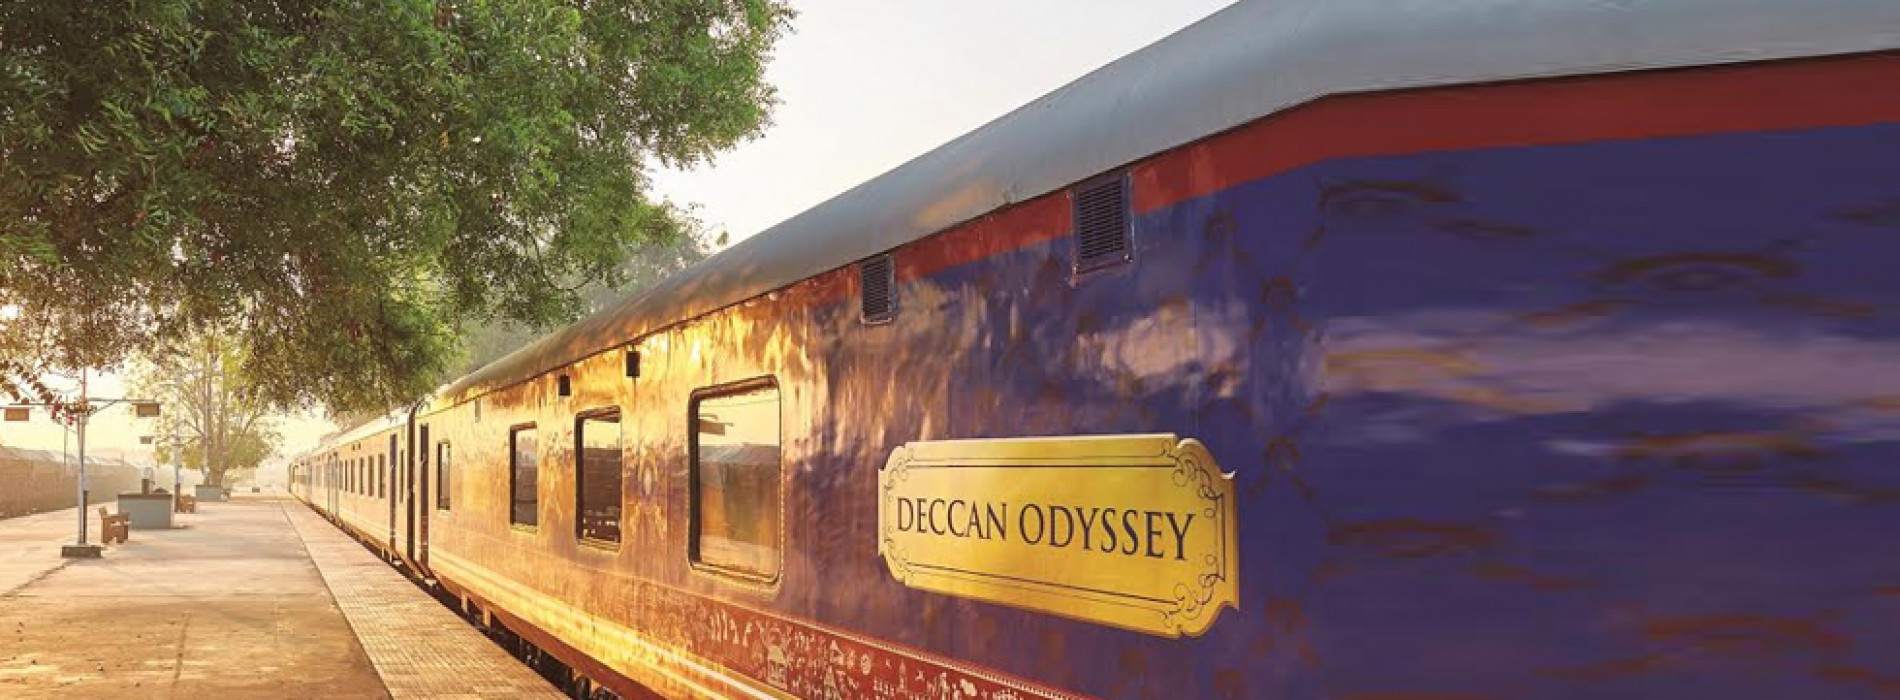 Deccan Odyssey’s 2017 companion scheme launched